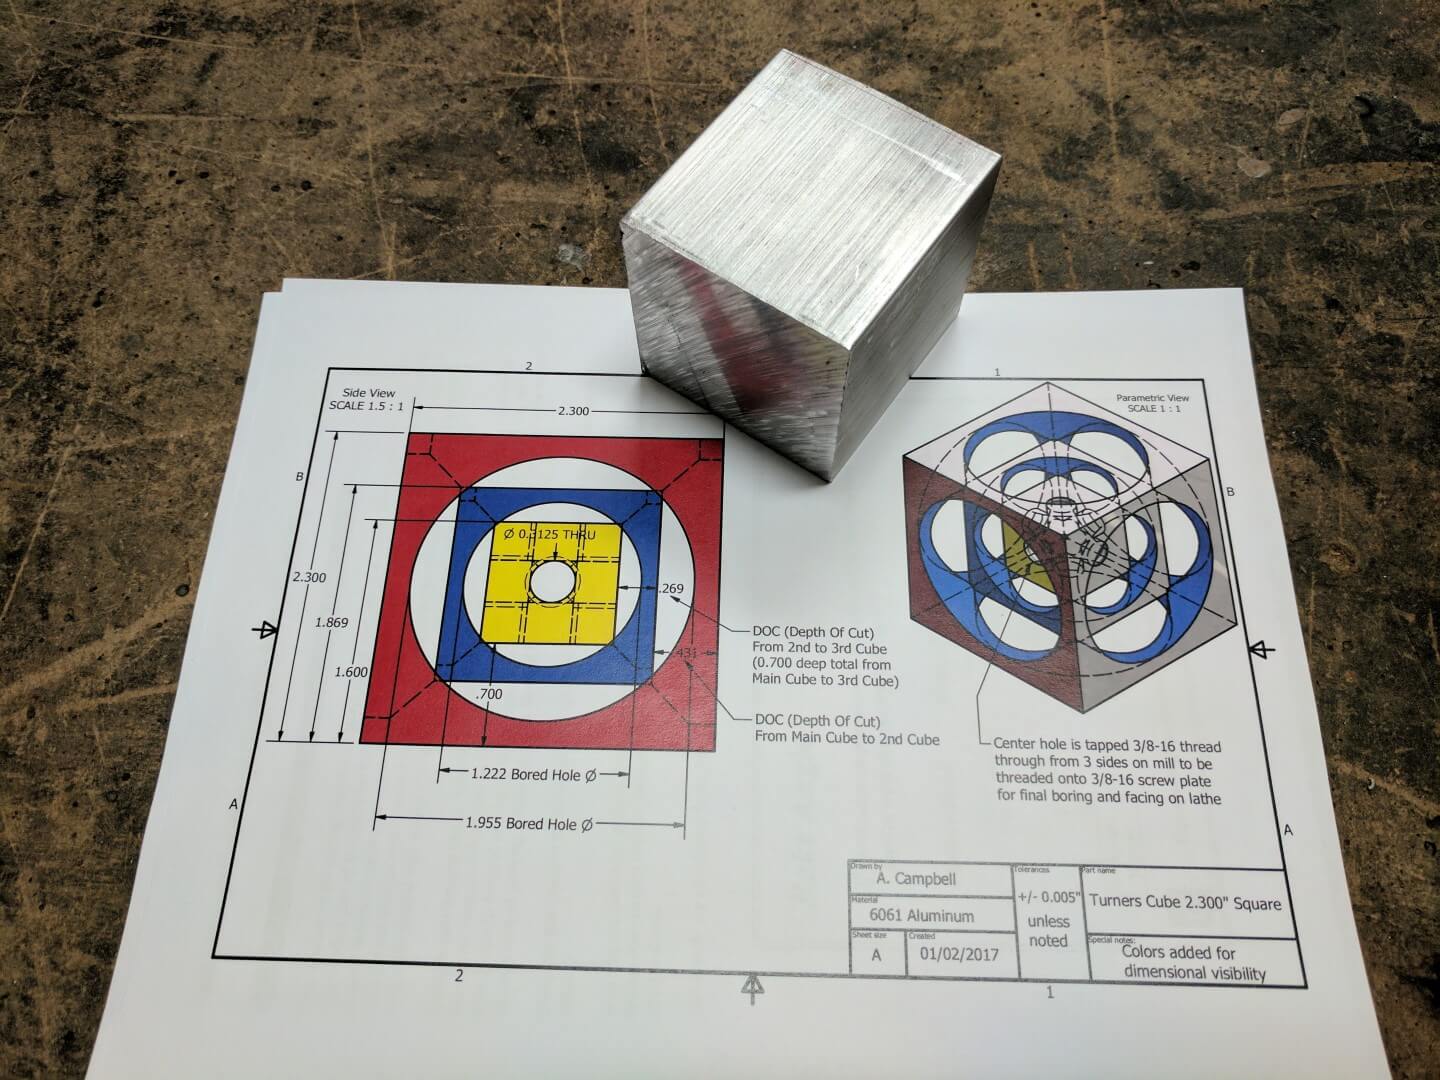 1 inch aluminum turners cube 